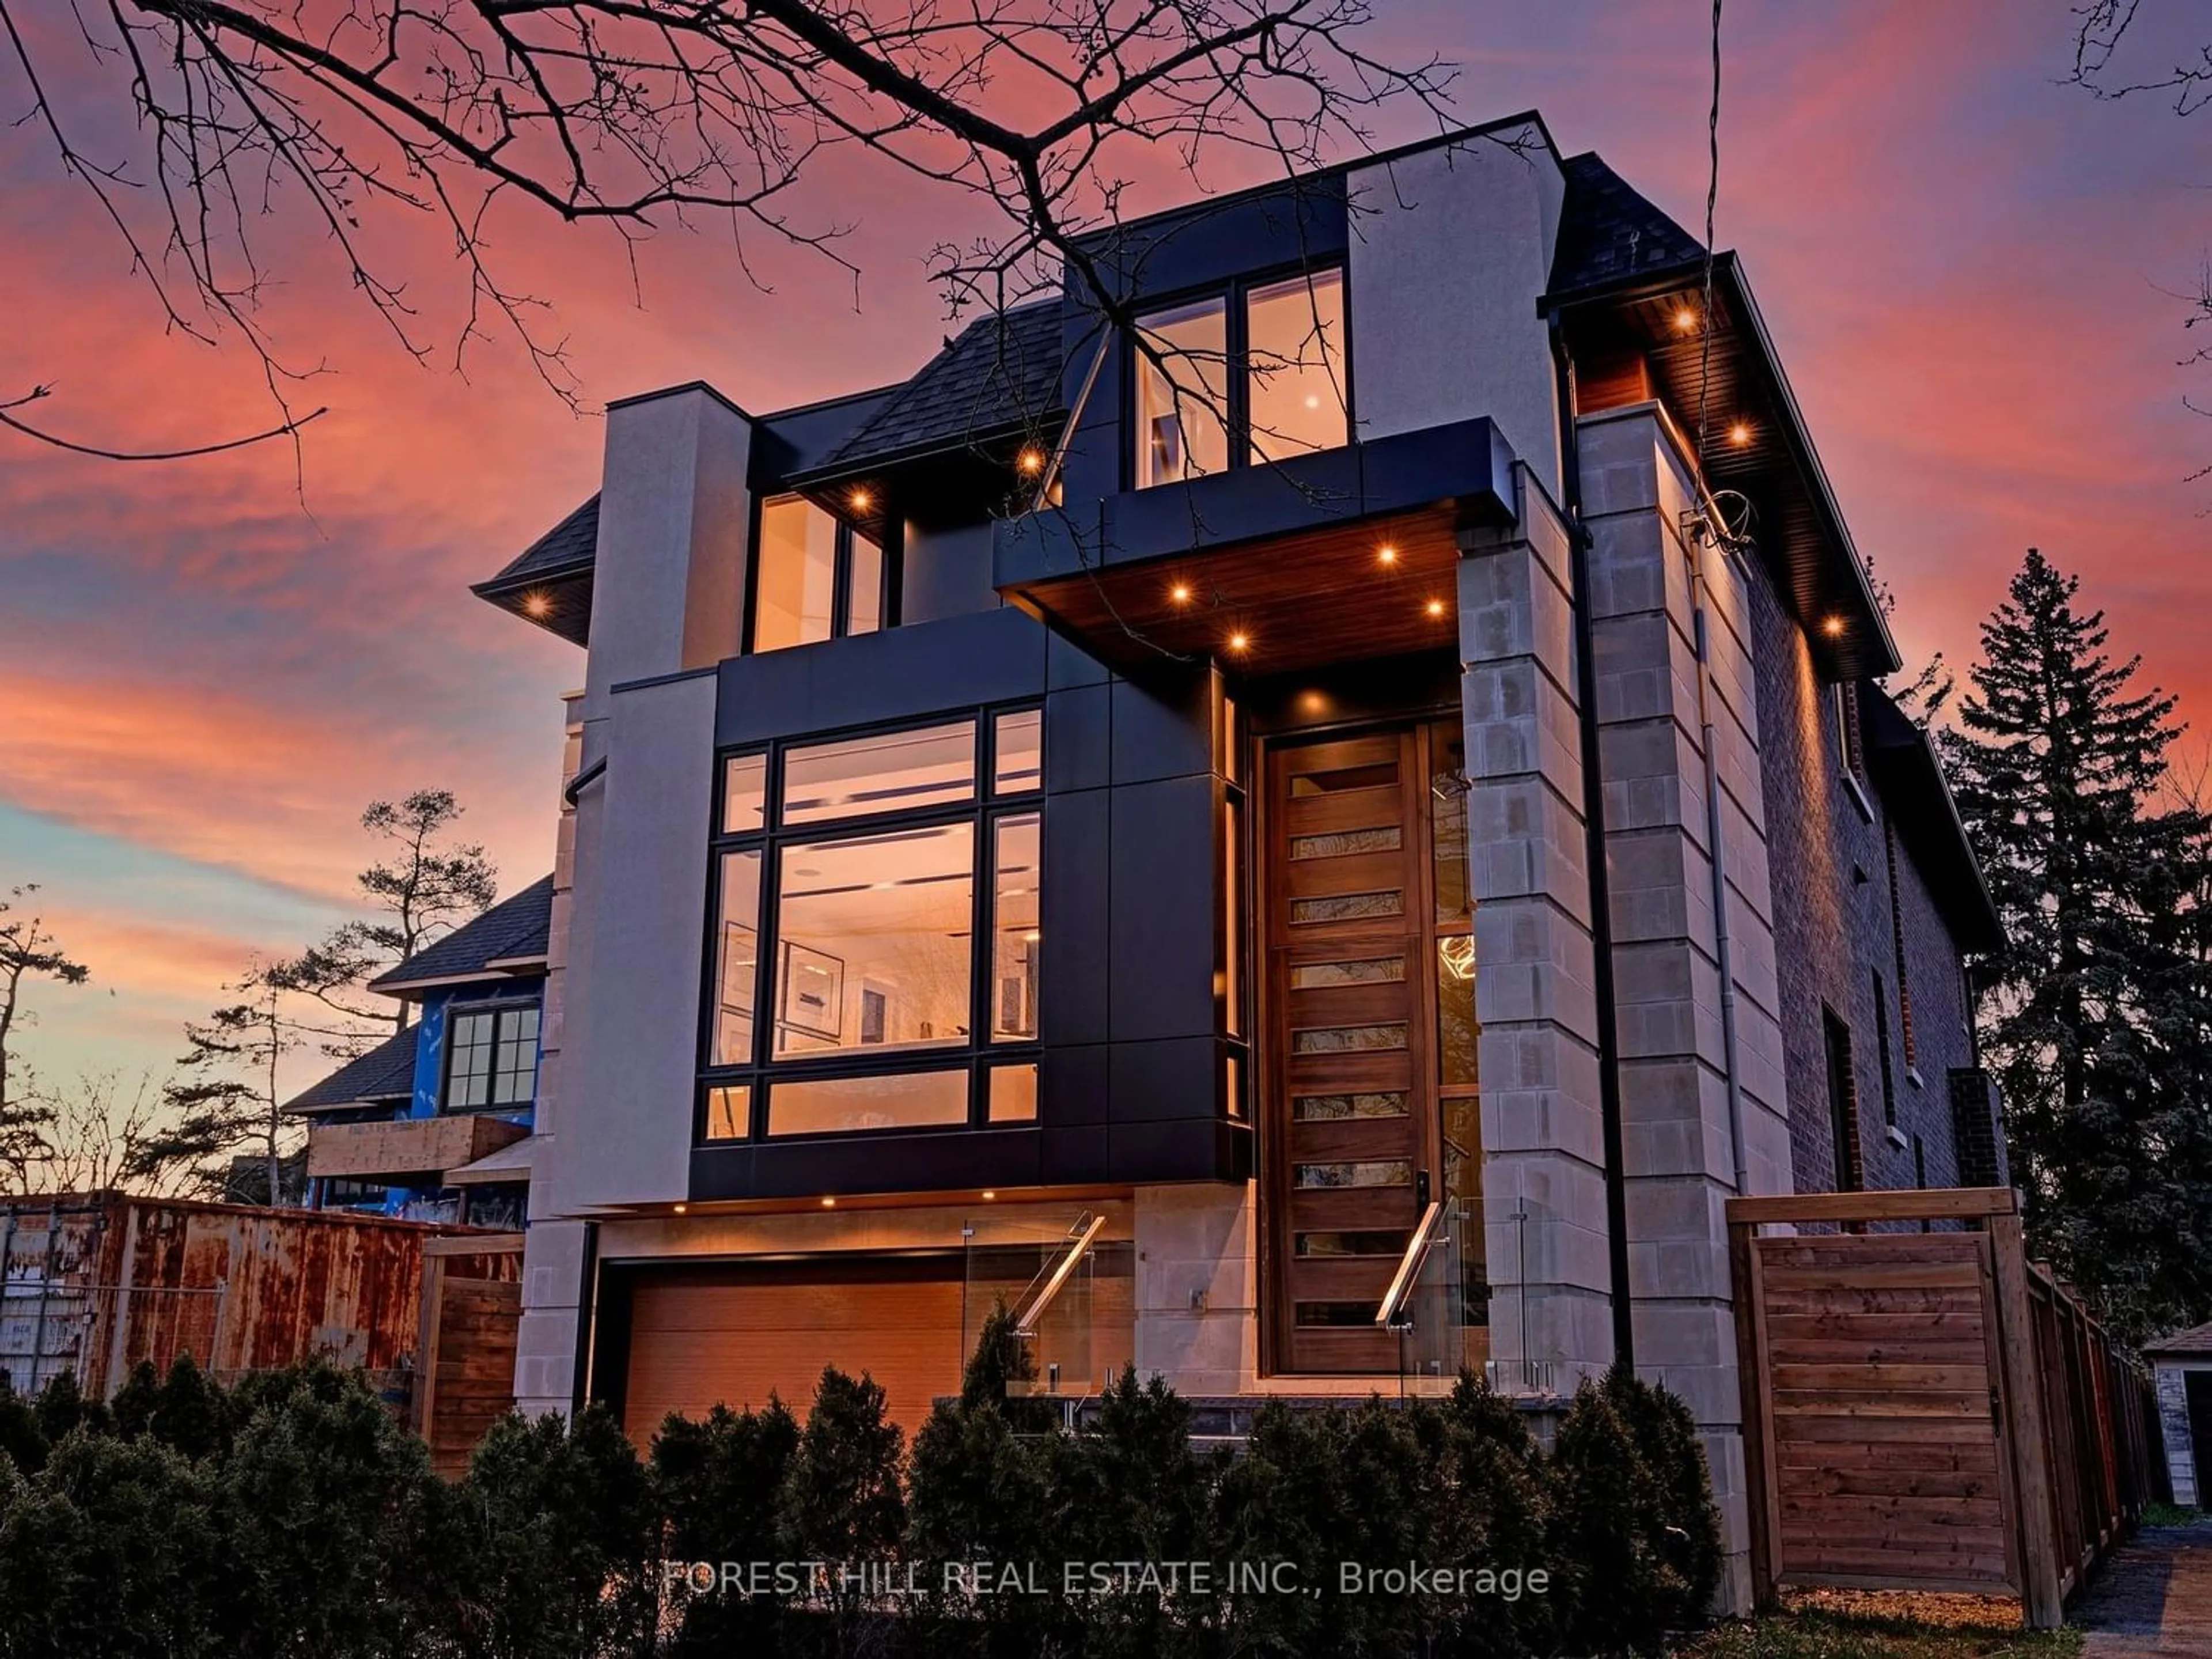 Home with brick exterior material for 208 Churchill Ave, Toronto Ontario M2R 1E1